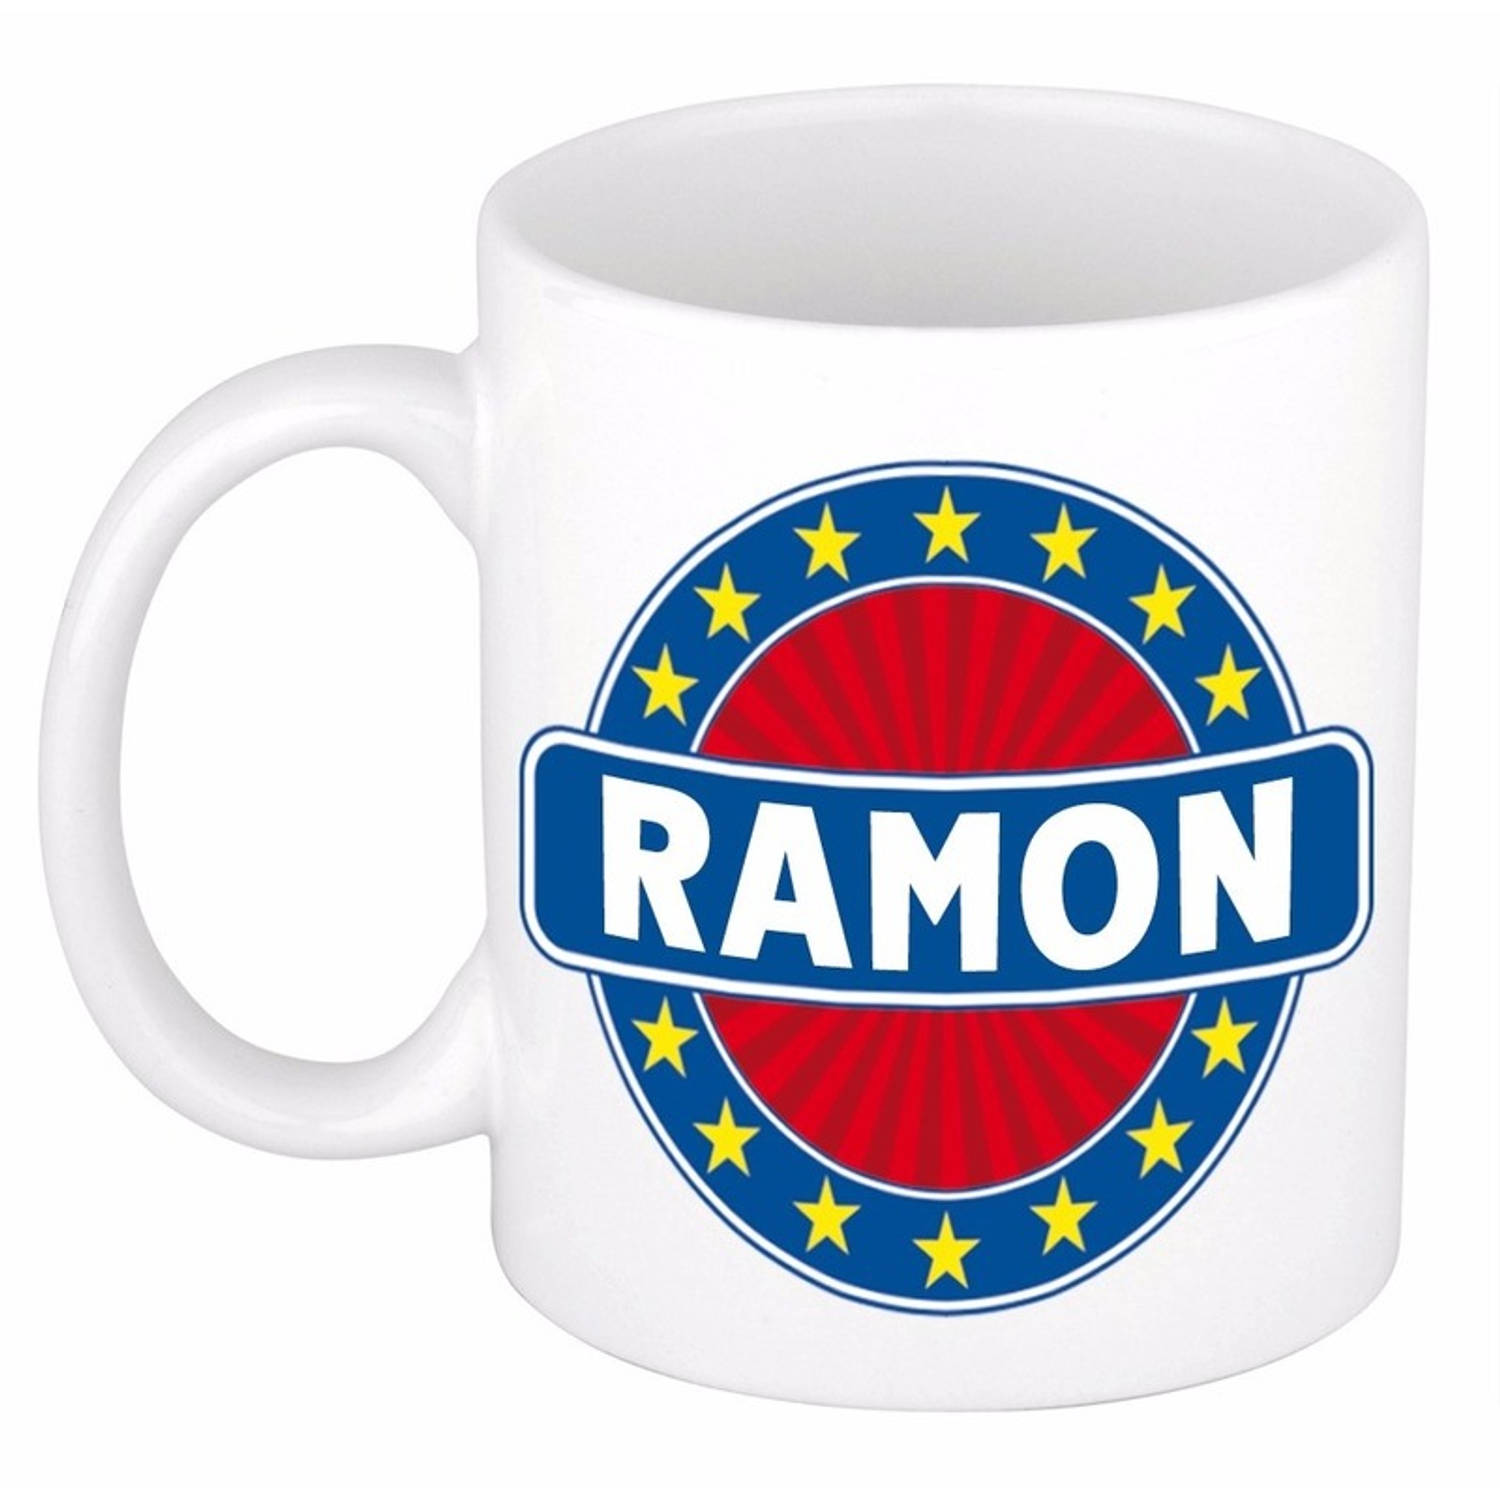 Ramon naam koffie mok-beker 300 ml namen mokken